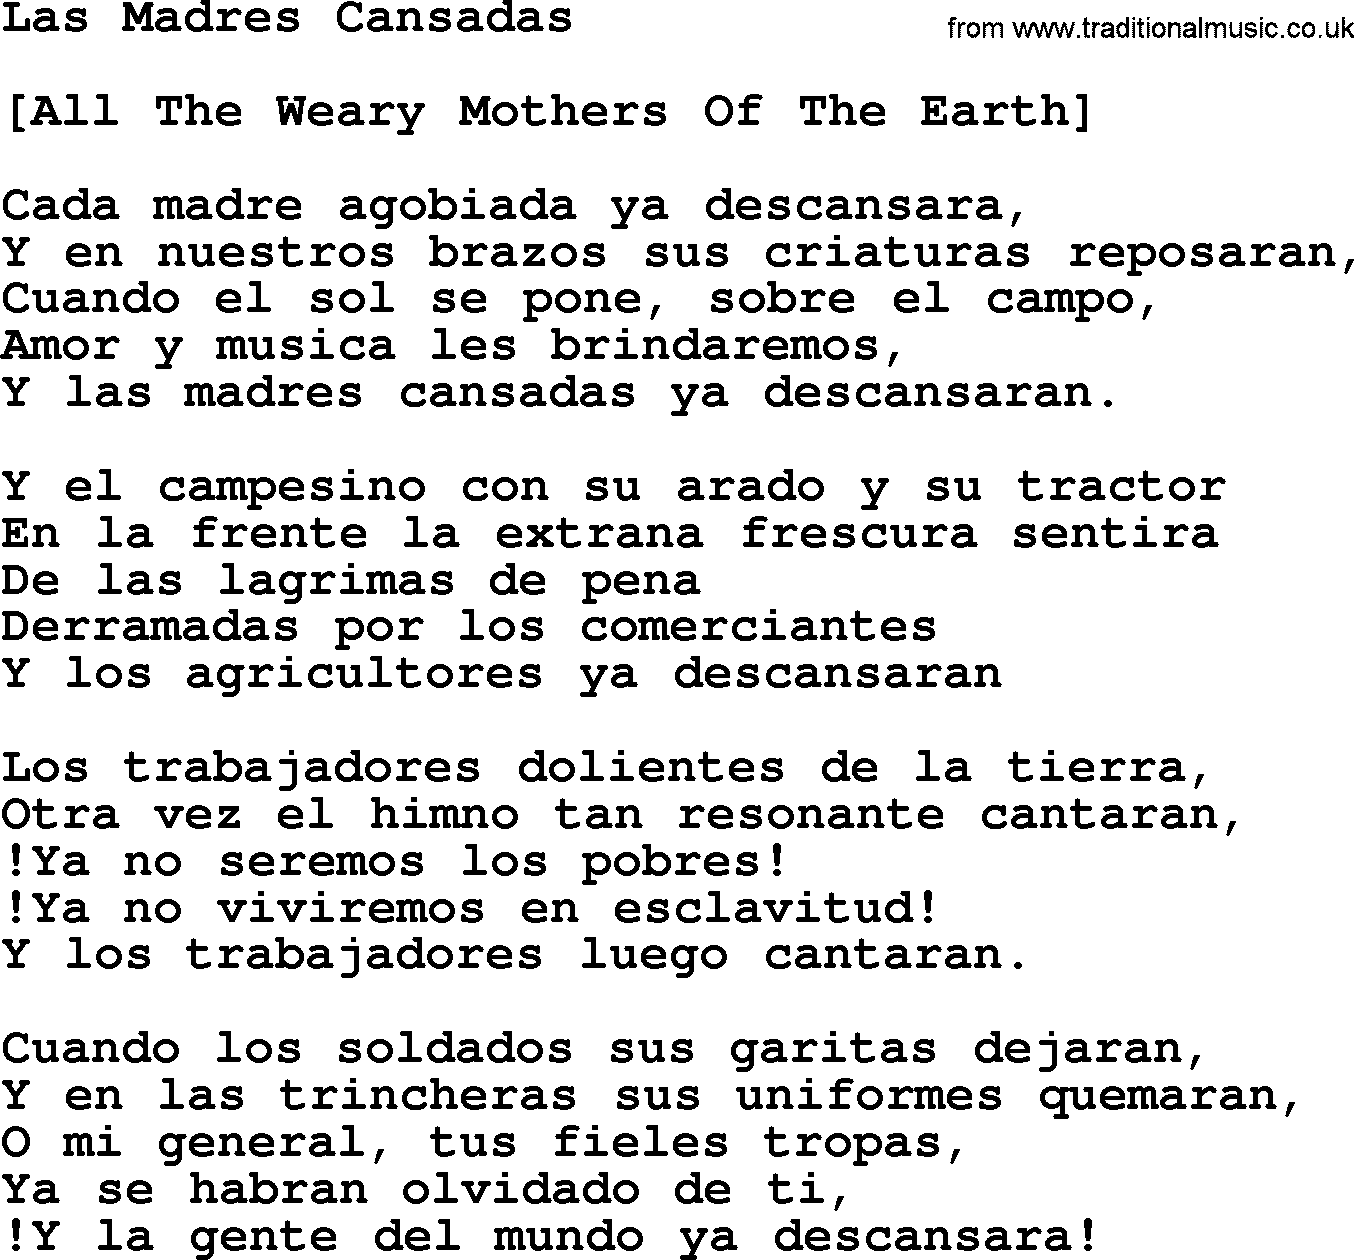 Joan Baez song Las Madres Cansadas, lyrics